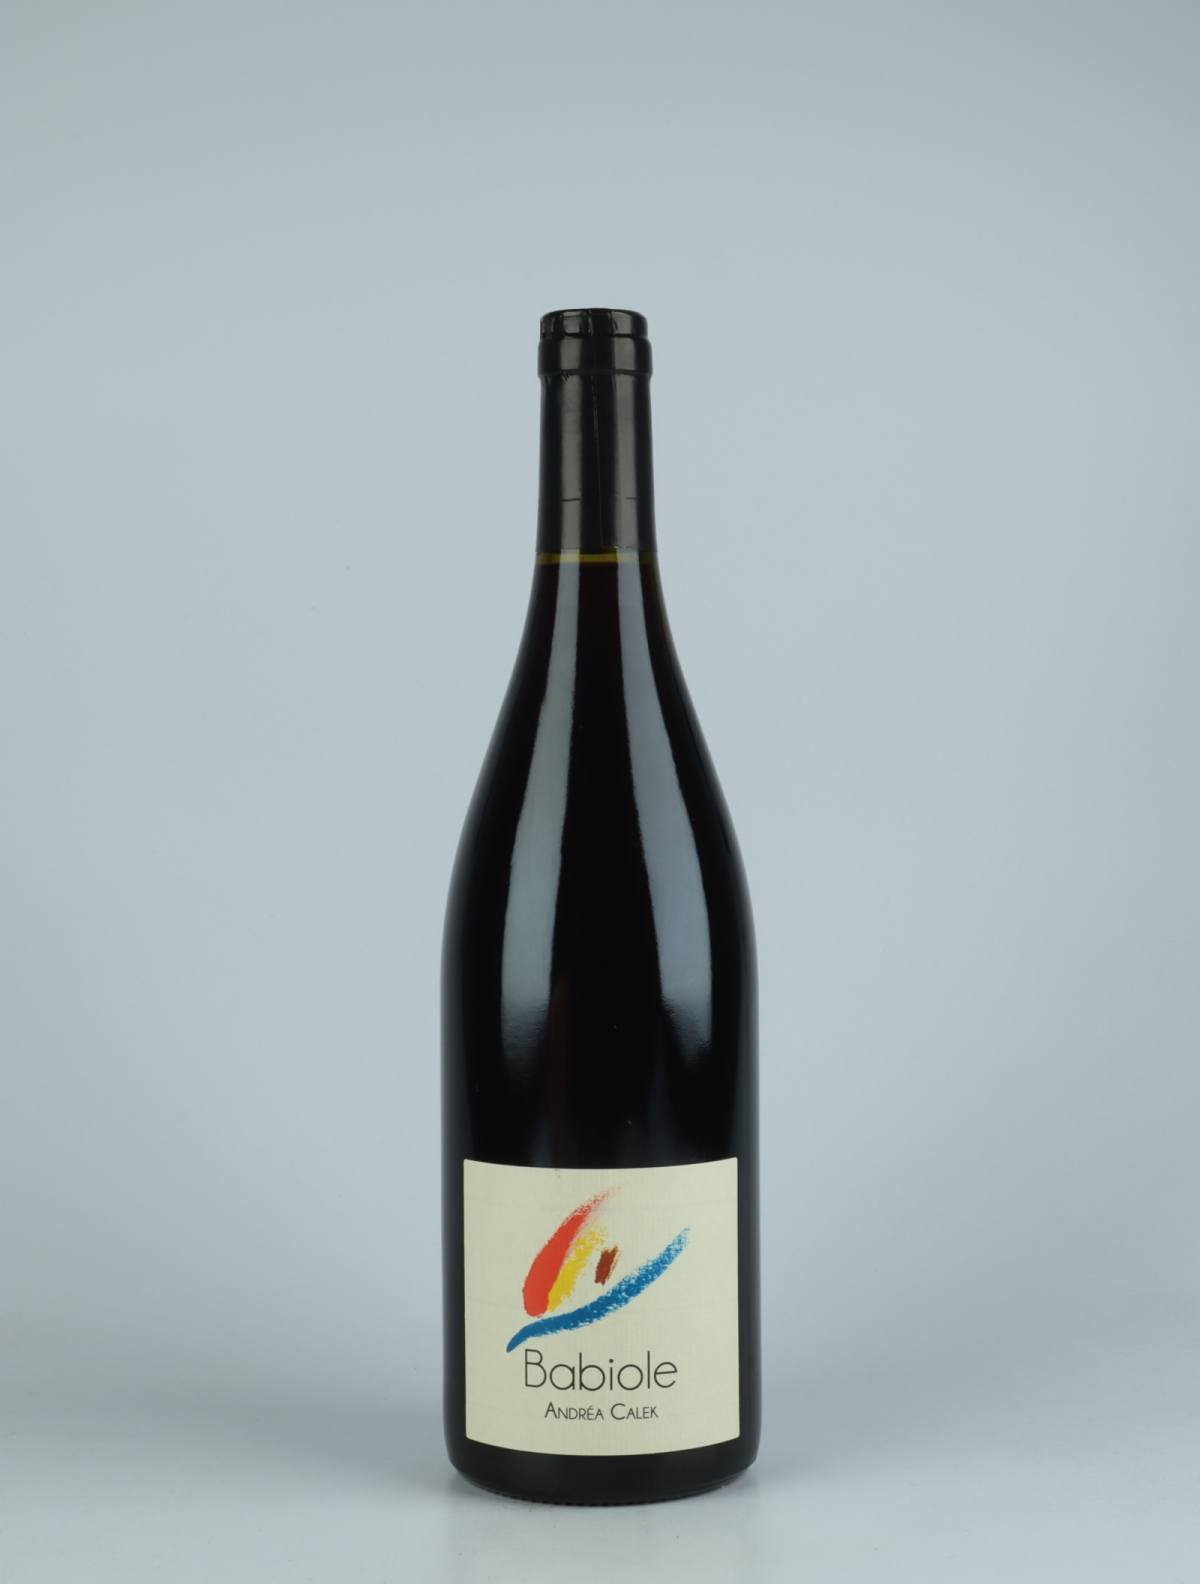 A bottle 2021 Babiole Red wine from Andrea Calek, Ardèche in France